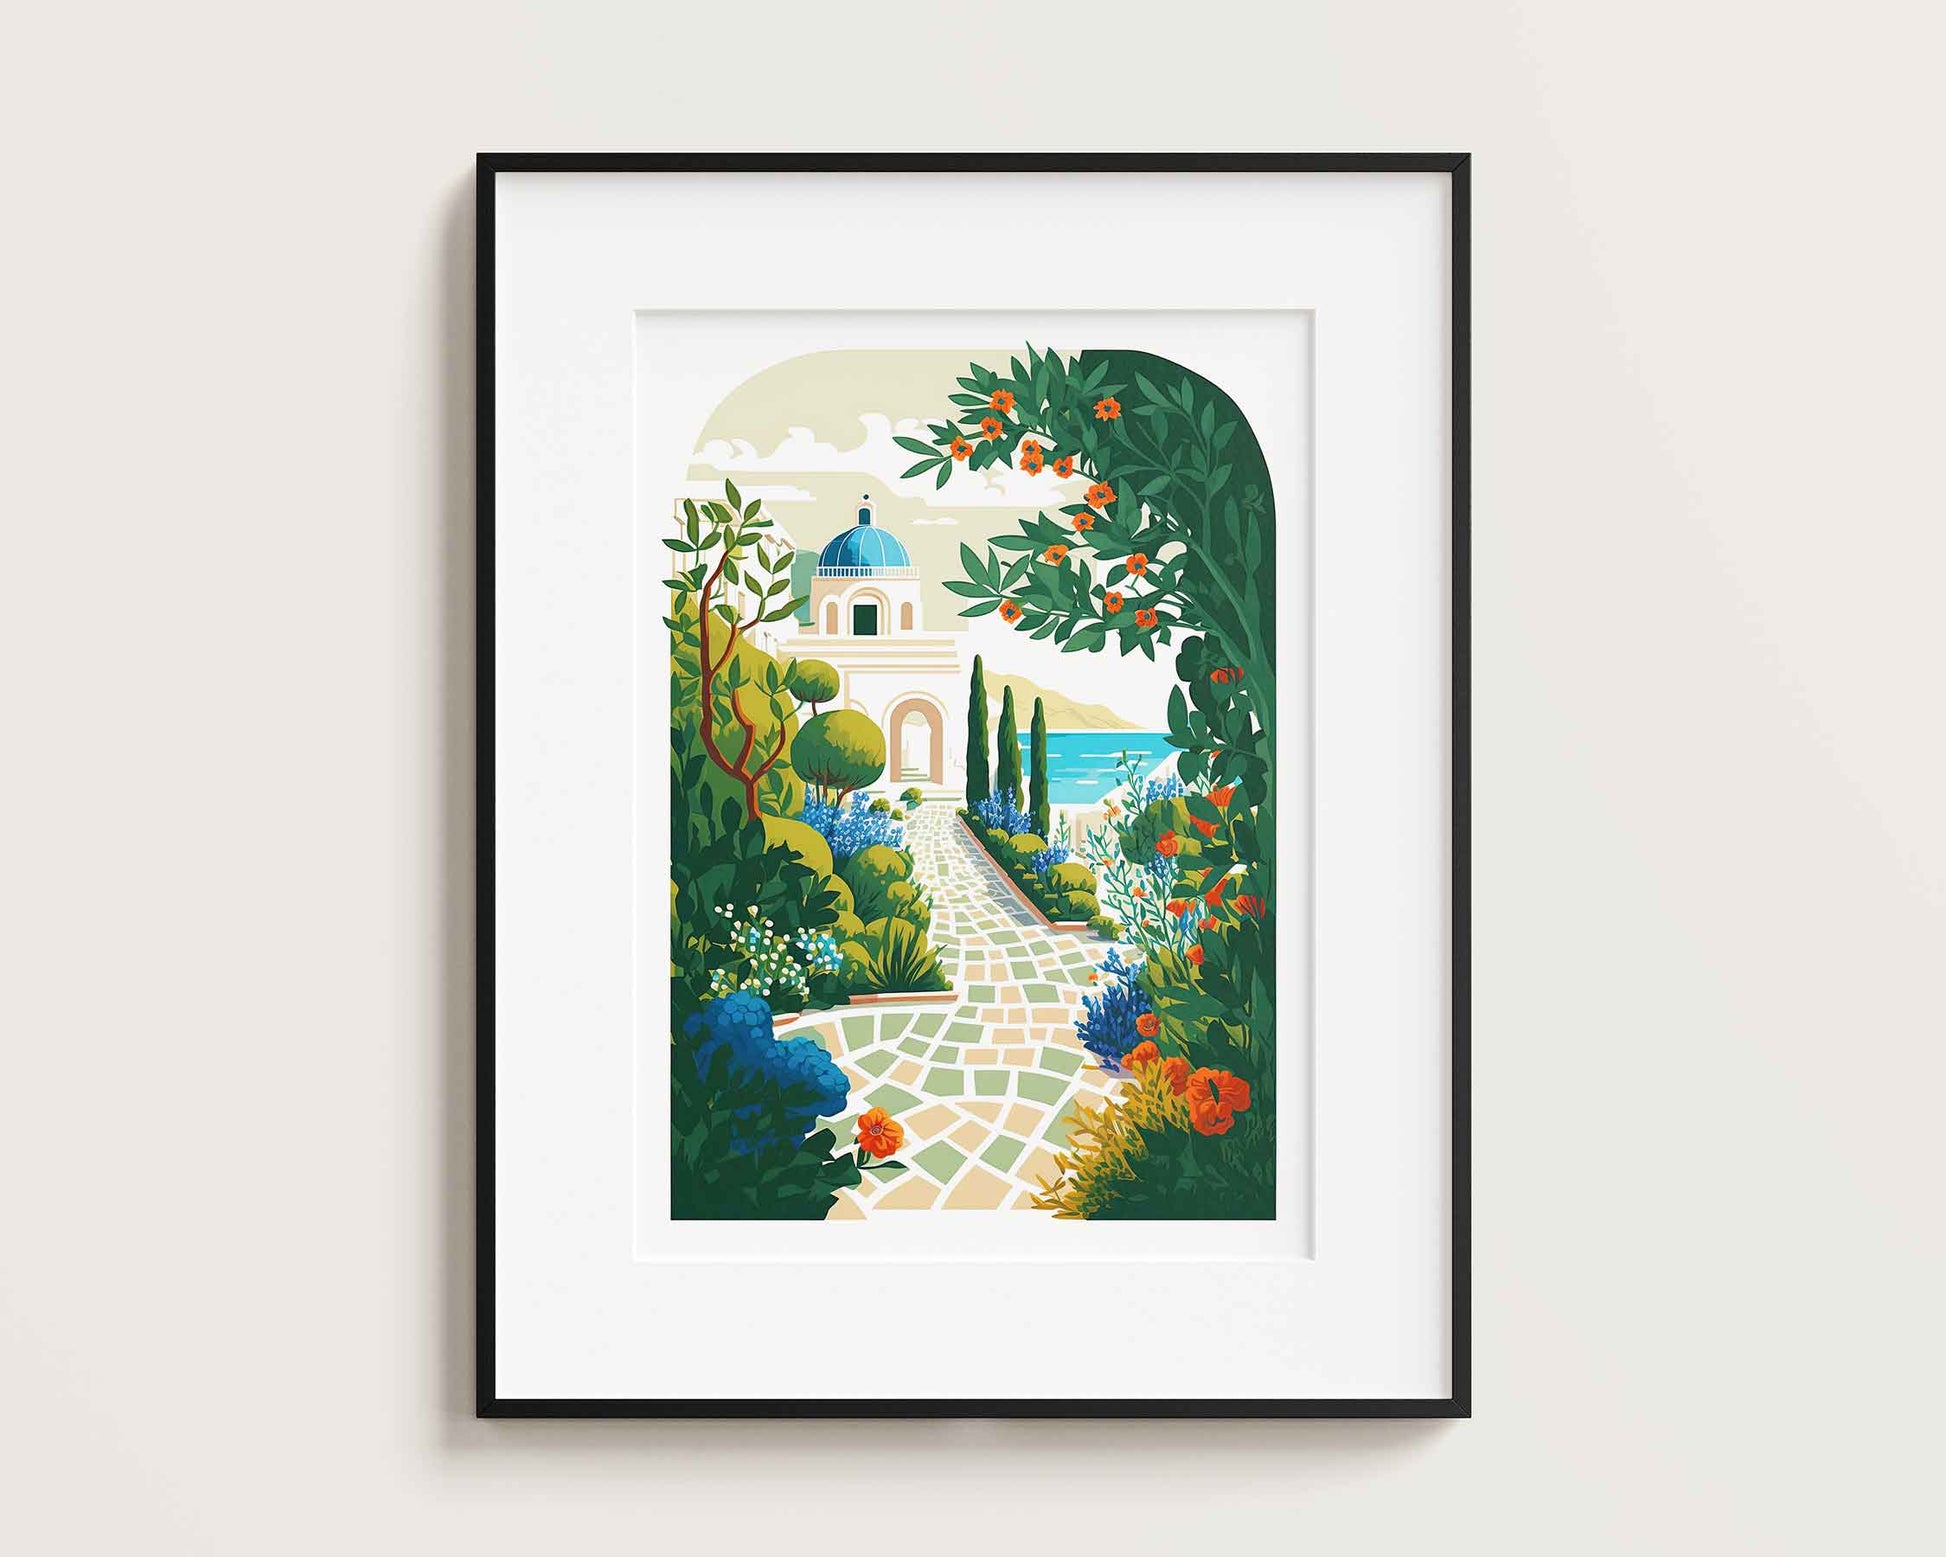 Framed Image of Greek Summer Garden in Bloom Illustration Wall Art Poster Print